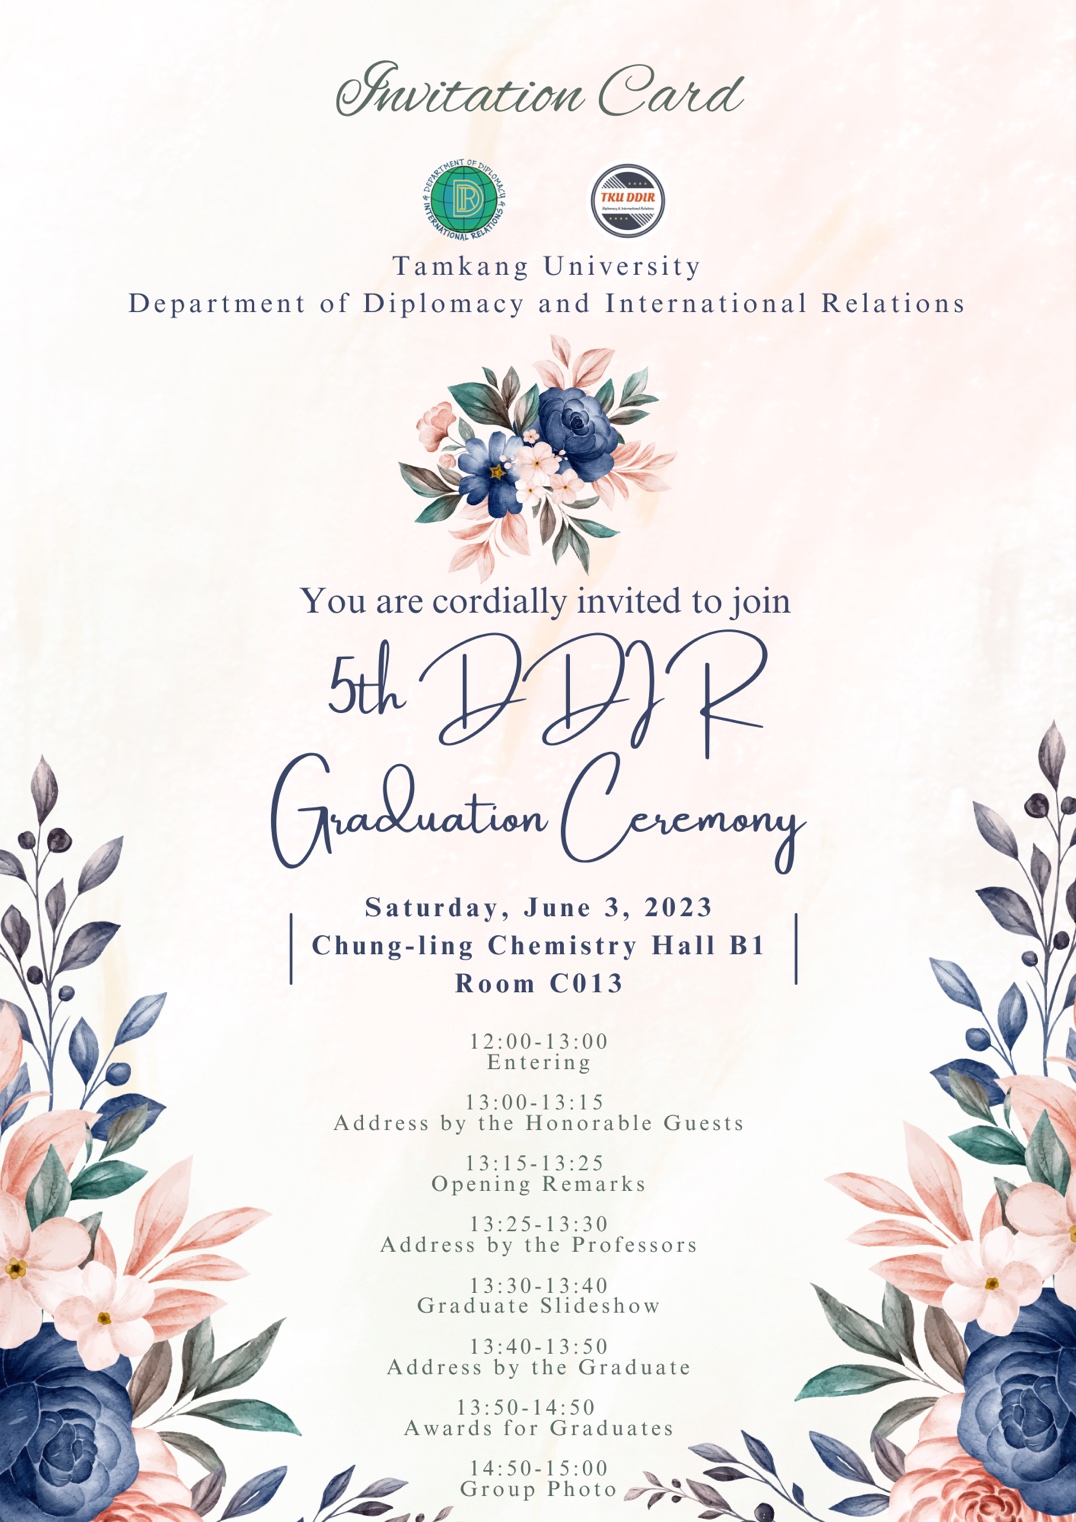 5th DDIR Graduation Ceremony Invitation Card, 3rd of June, 2023